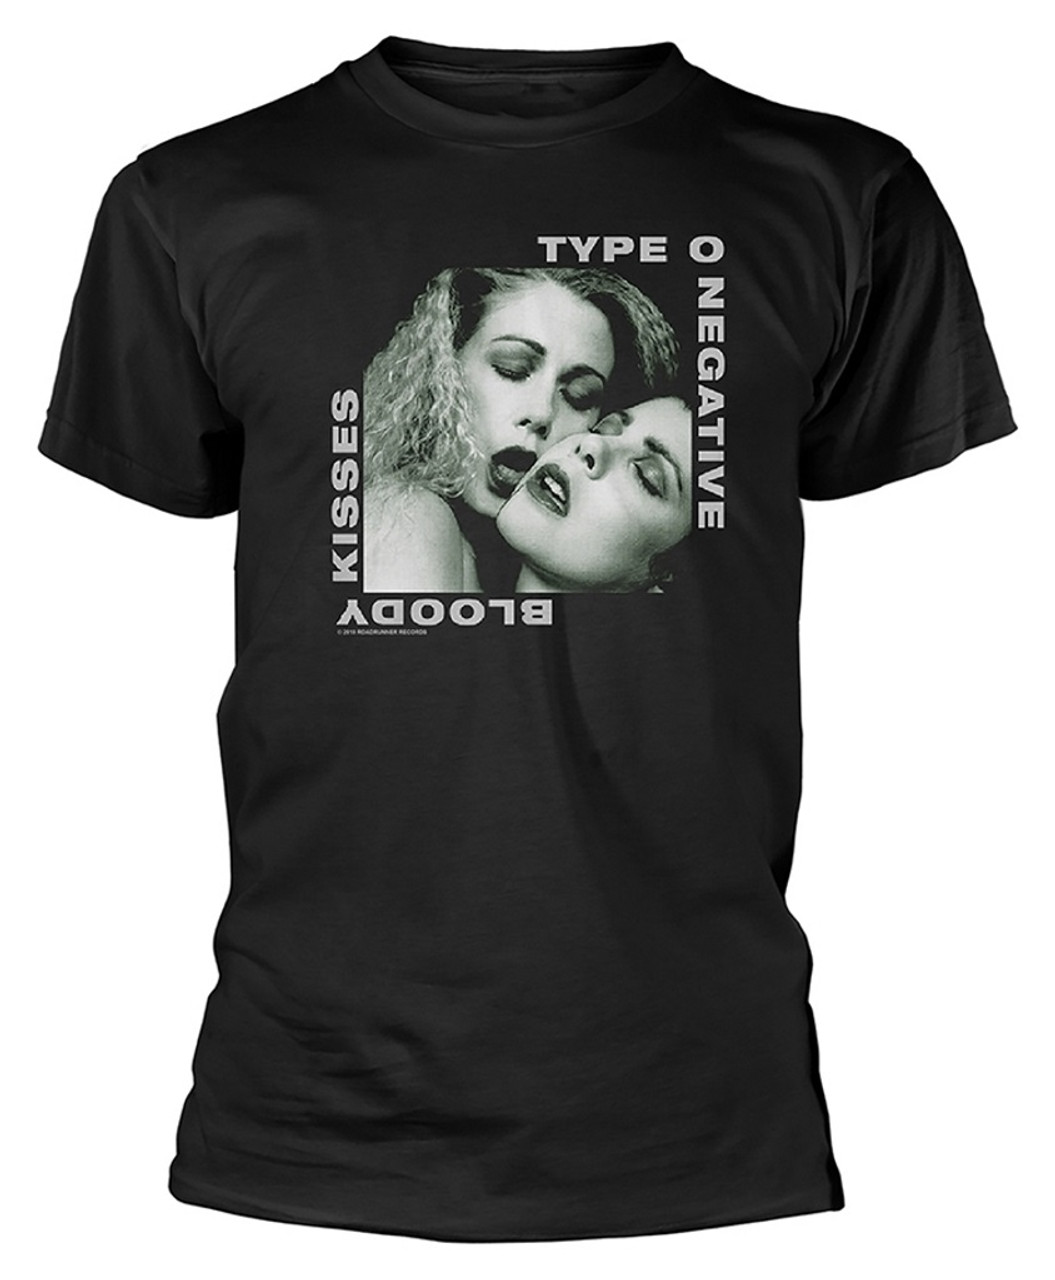 Type O Negative 'Bloody Kisses' (Black) T-Shirt